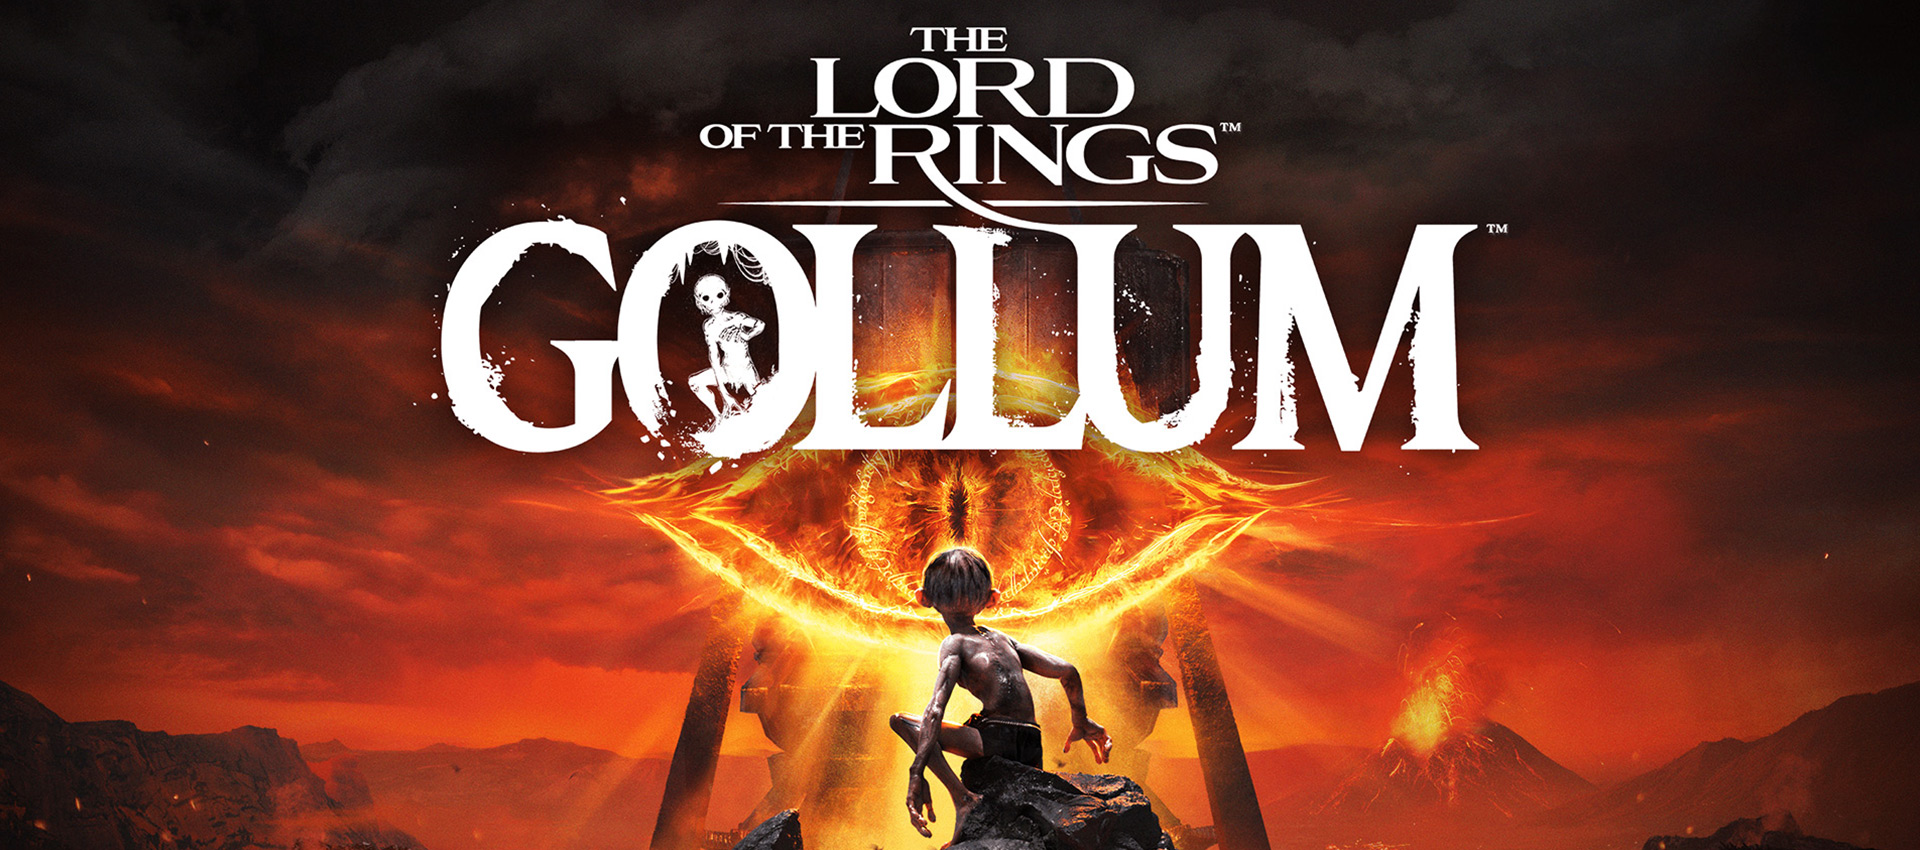 بررسی بازی The Lord of the Rings: Gollum